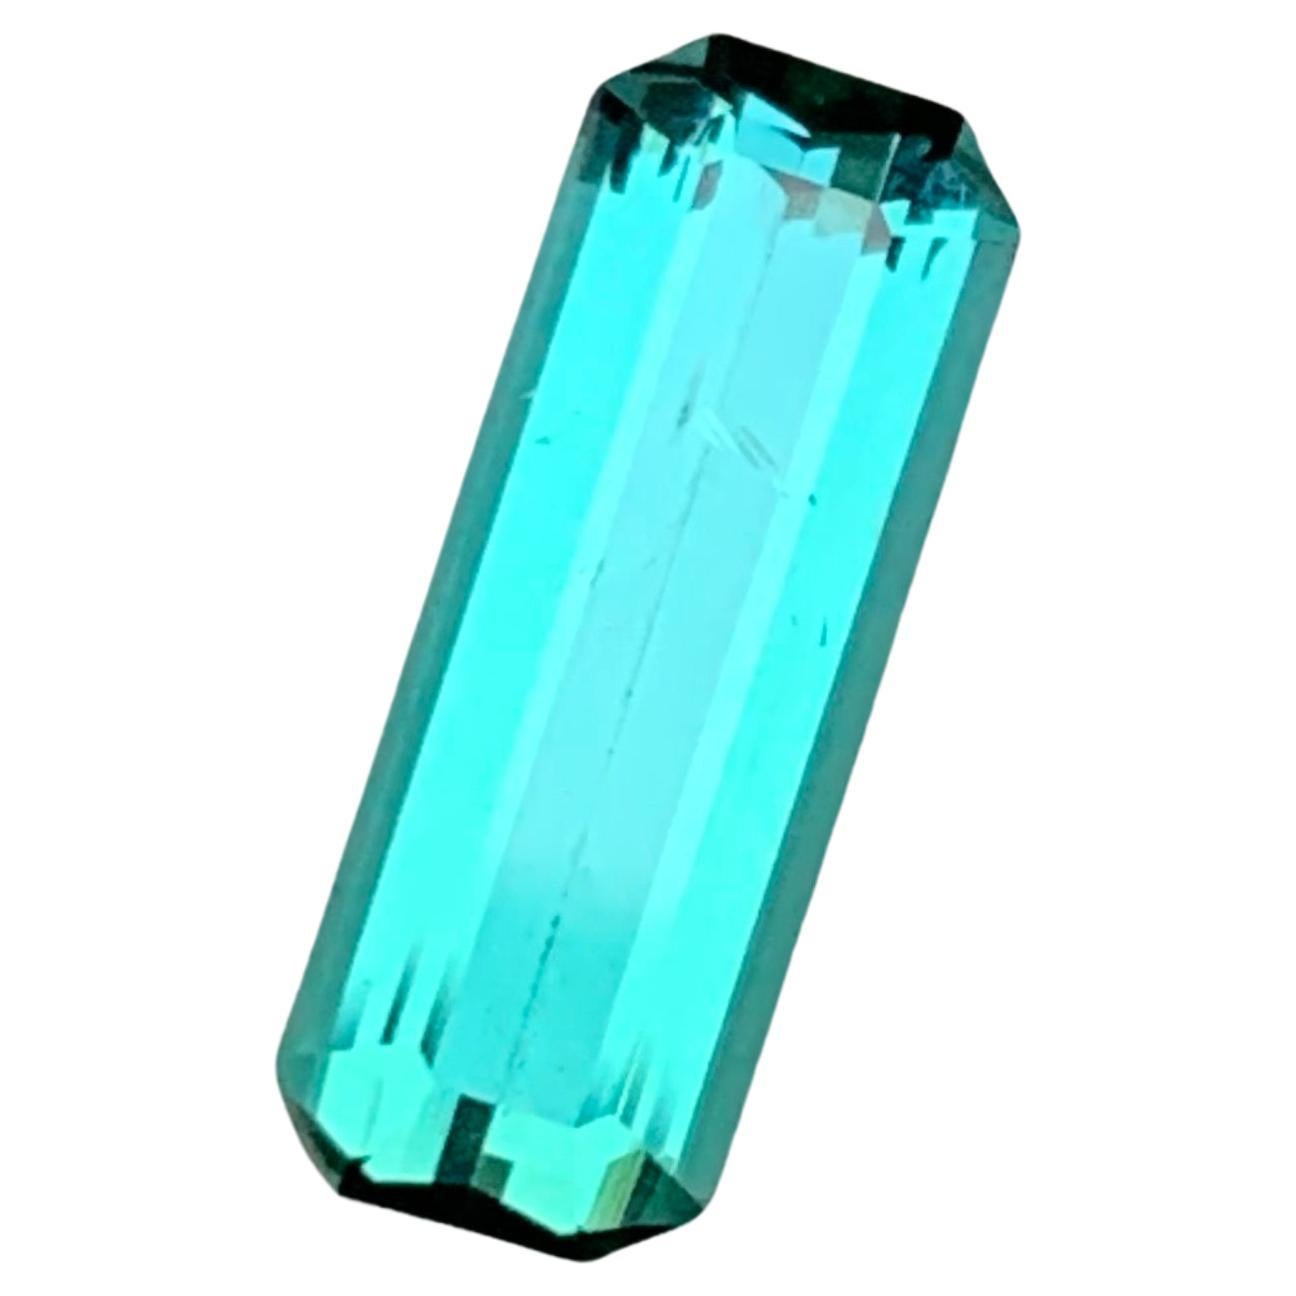 Rare Vivid Neon Bluish Green Hue Tourmaline Gemstone 1.75Ct Emerald Cut for Ring